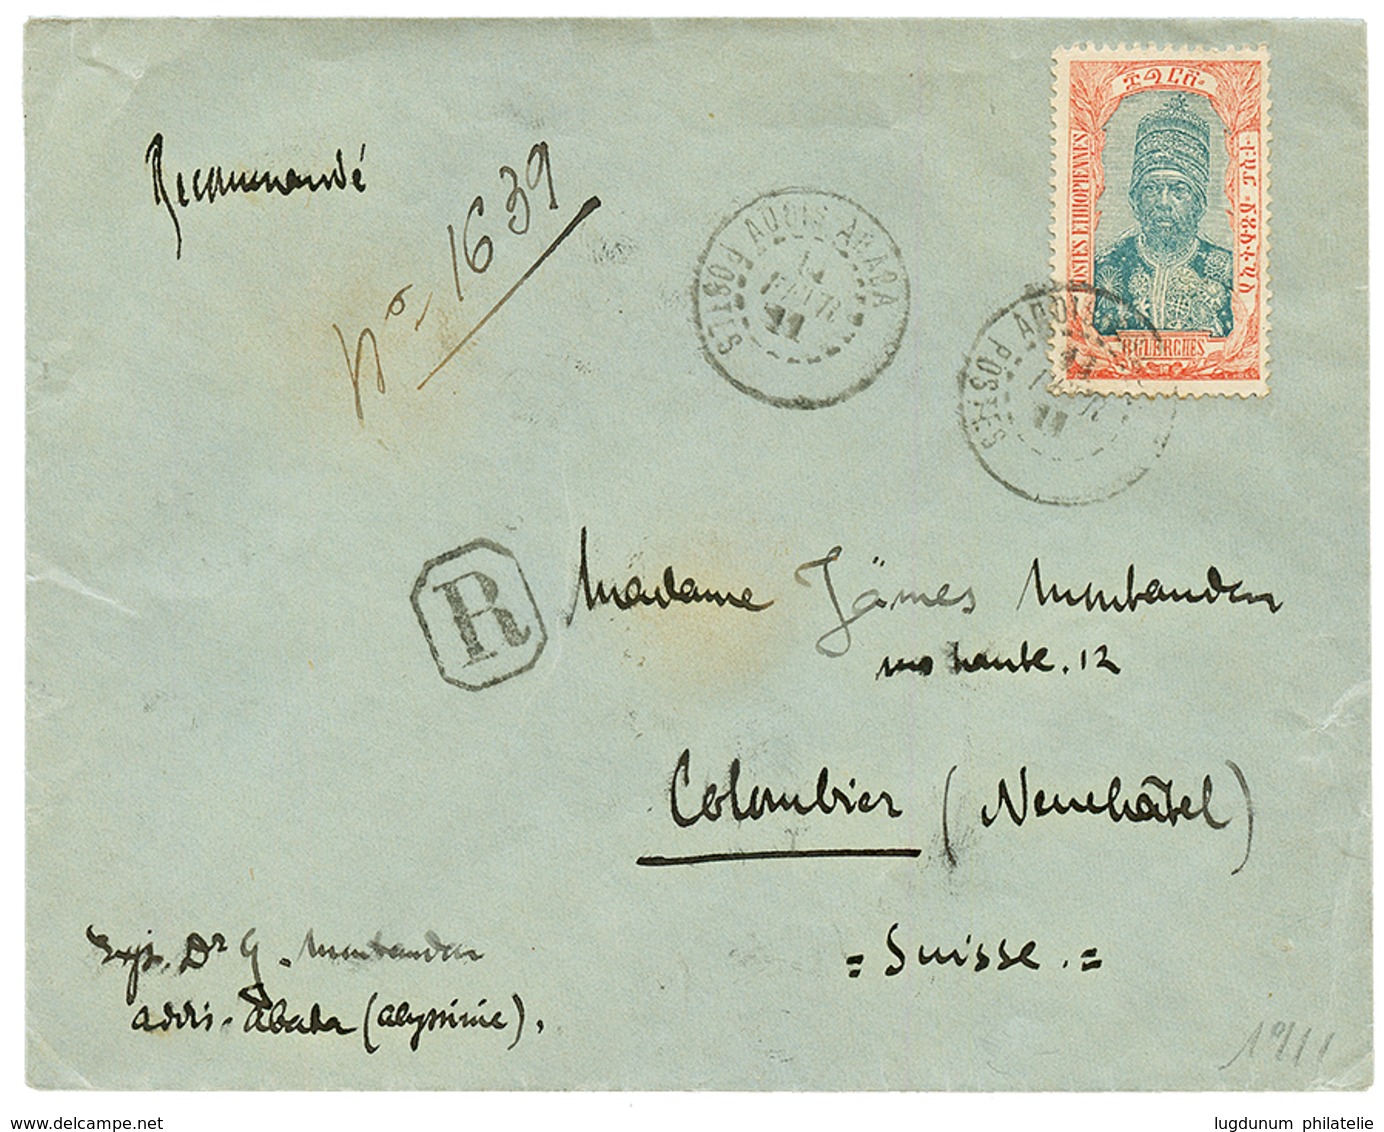 1911 8g Canc. ADDIS ABABA POSTES (french Type) On REGISTERED Envelope To SWITZERLAND. Scarce. Vvf. - Etiopía